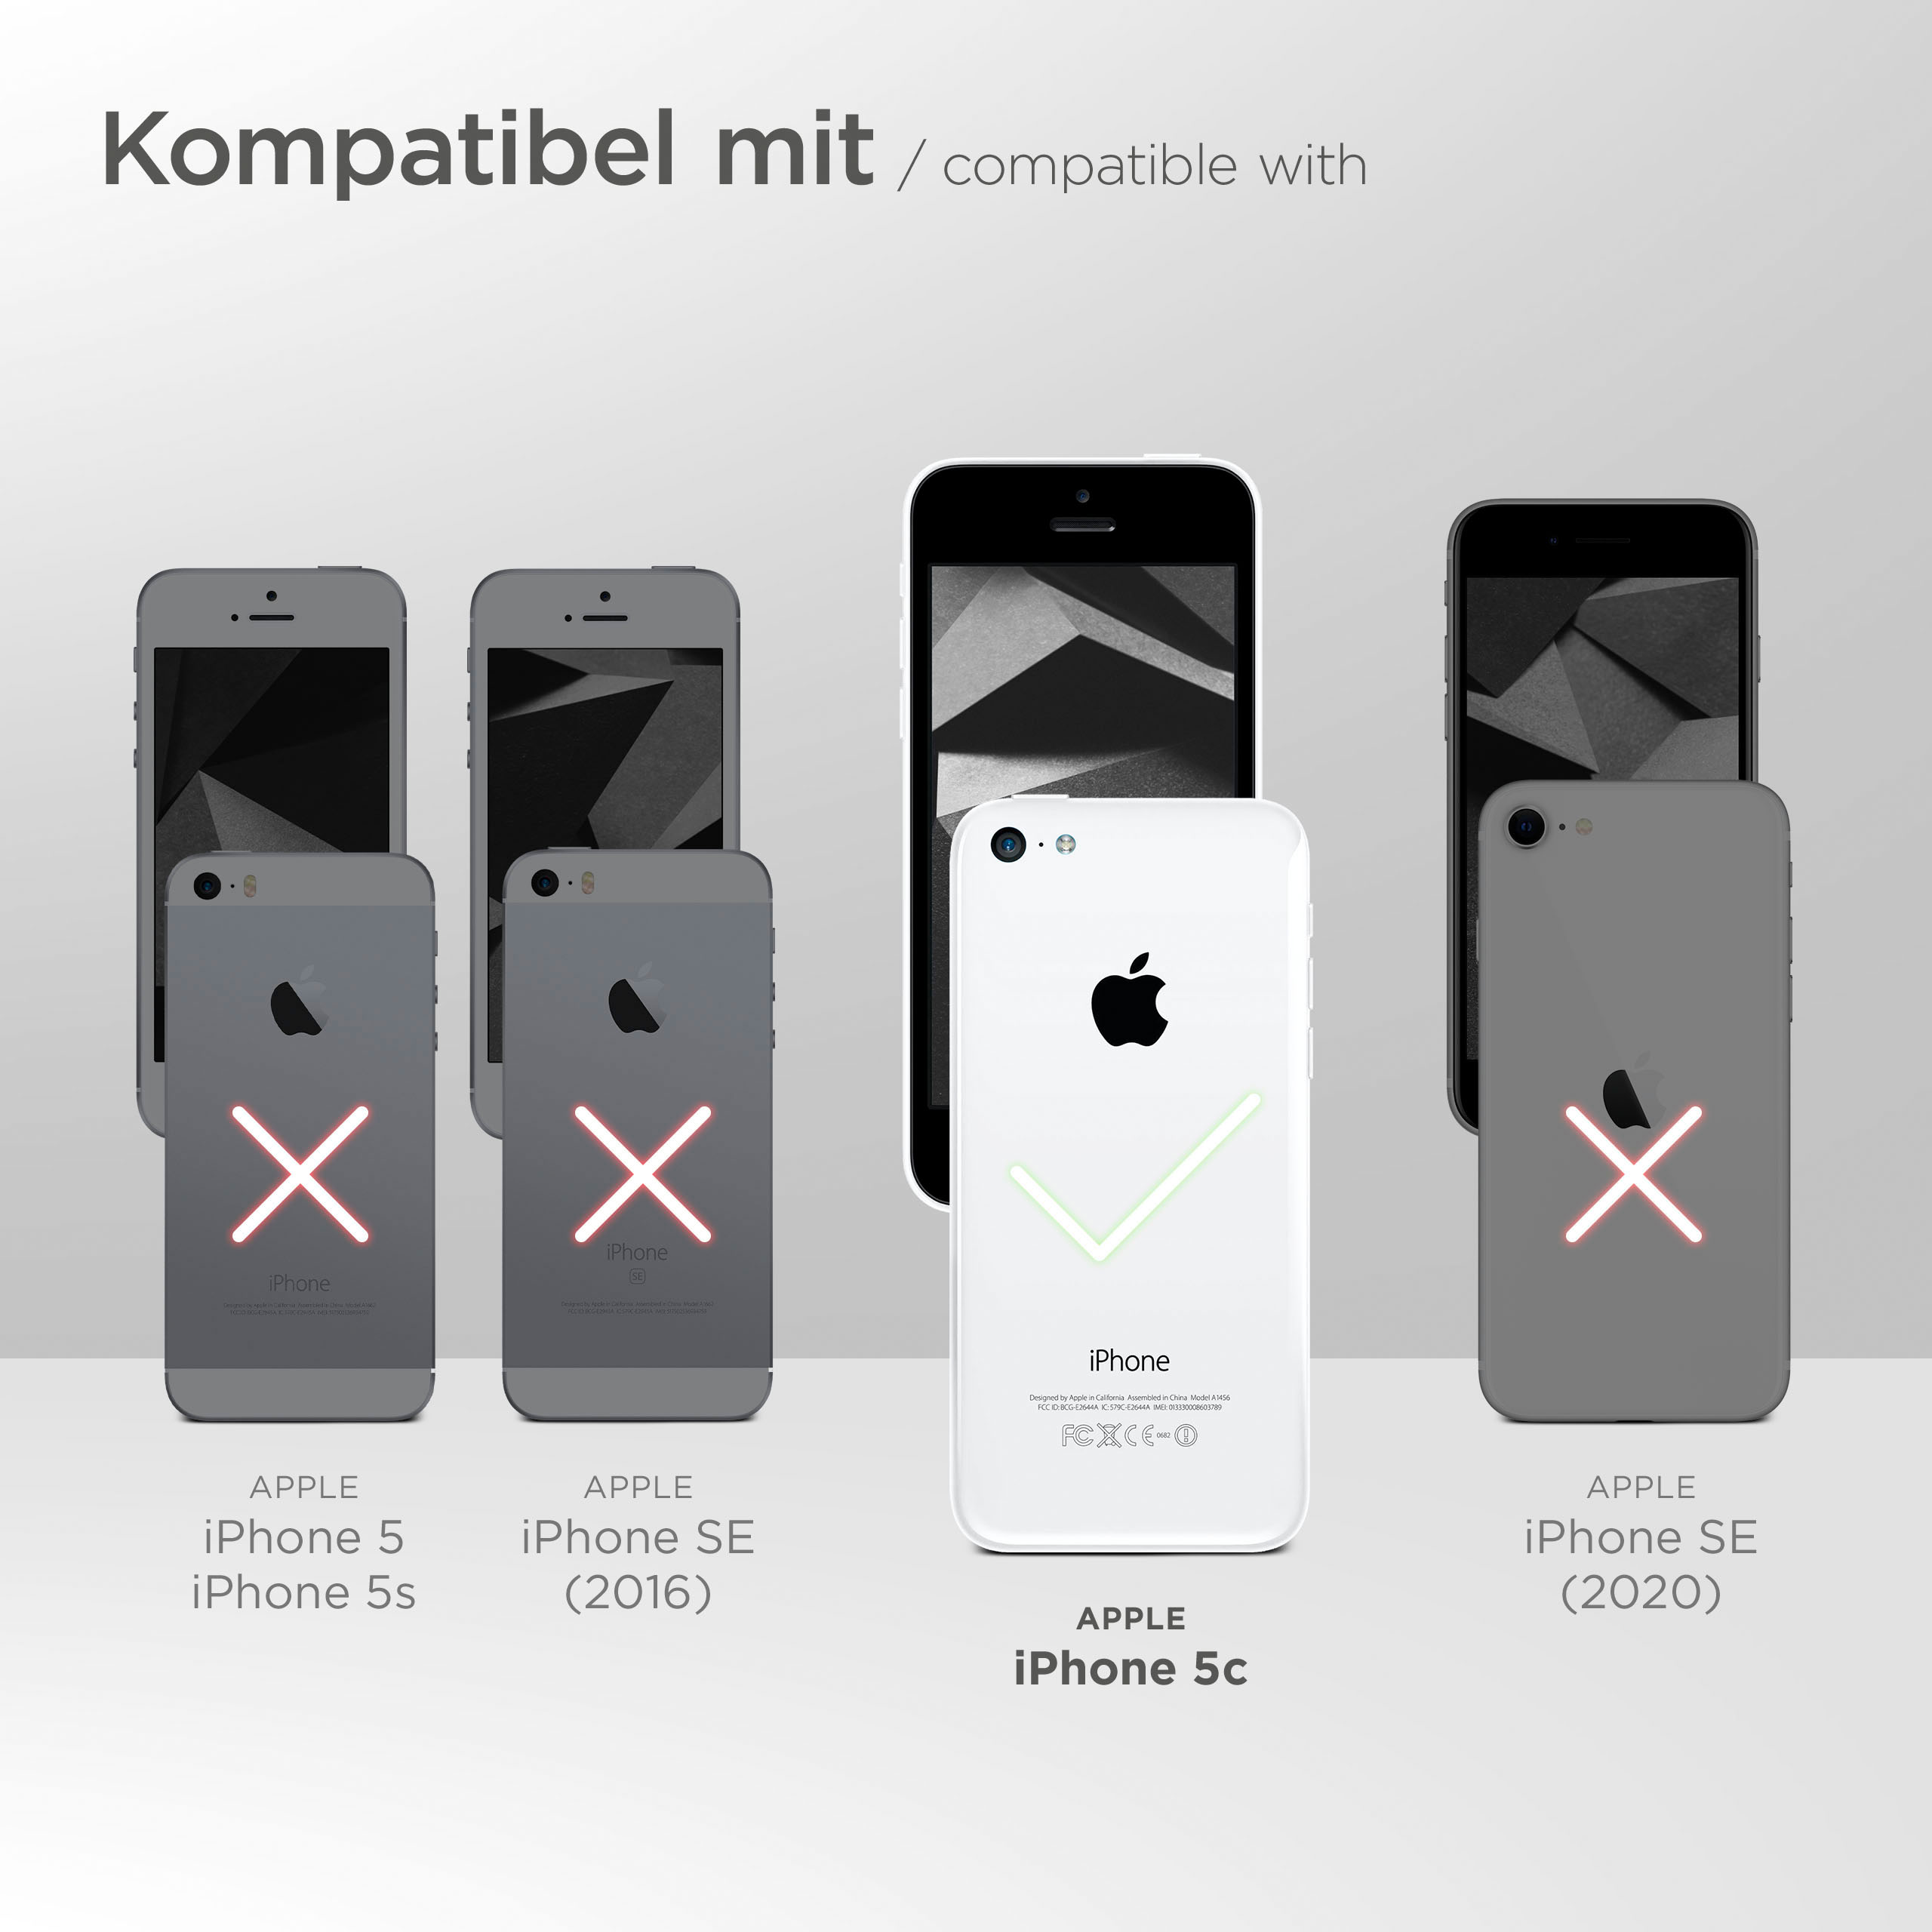 MOEX Flip iPhone 5c, Flip Case, Oxide-Brown Apple, Cover